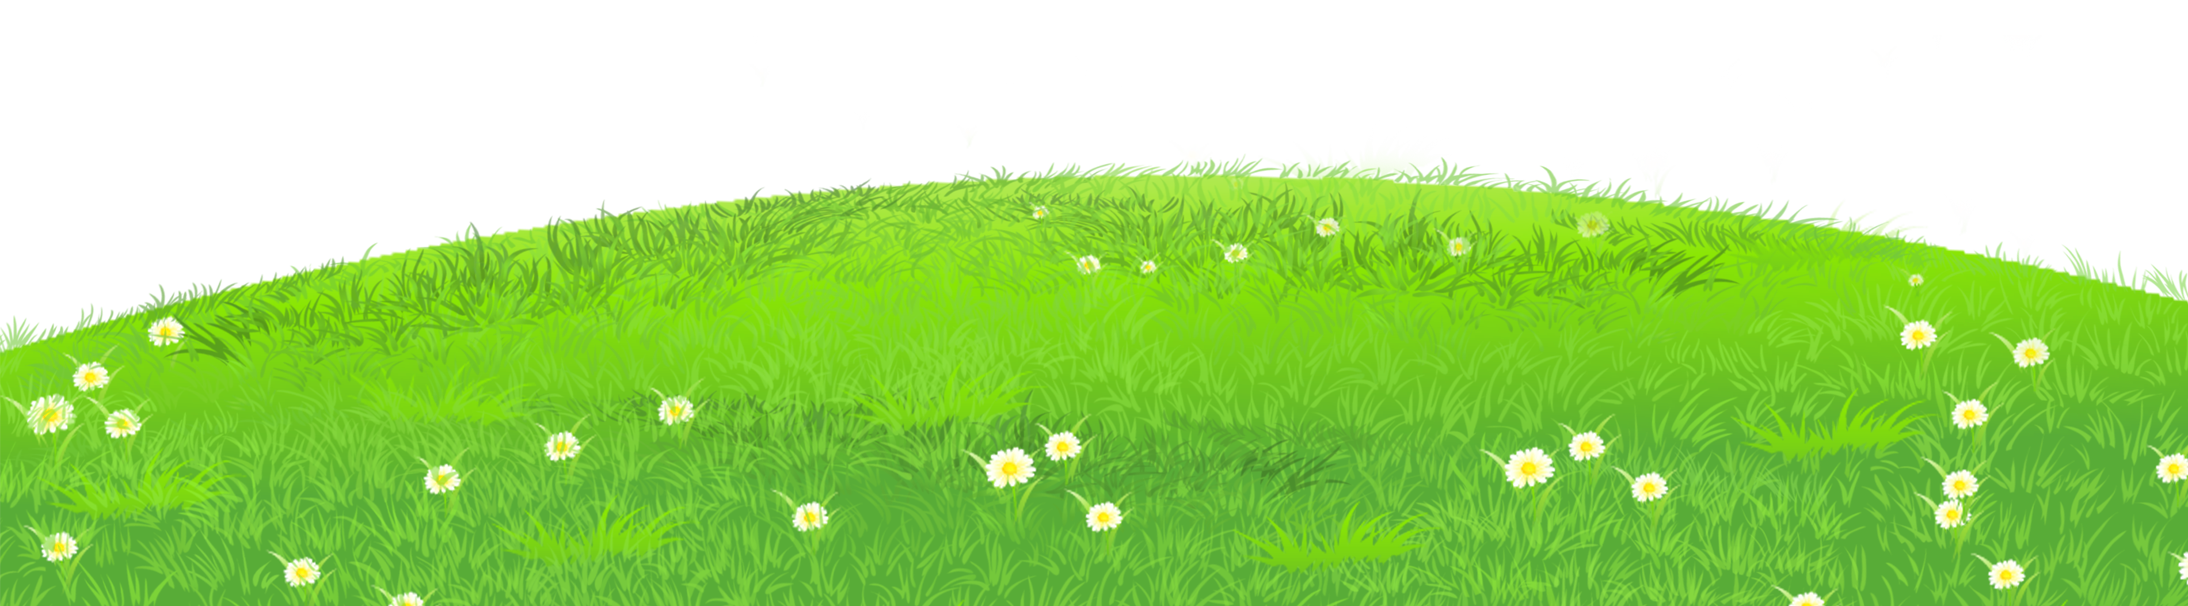 free clipart green grass - photo #40